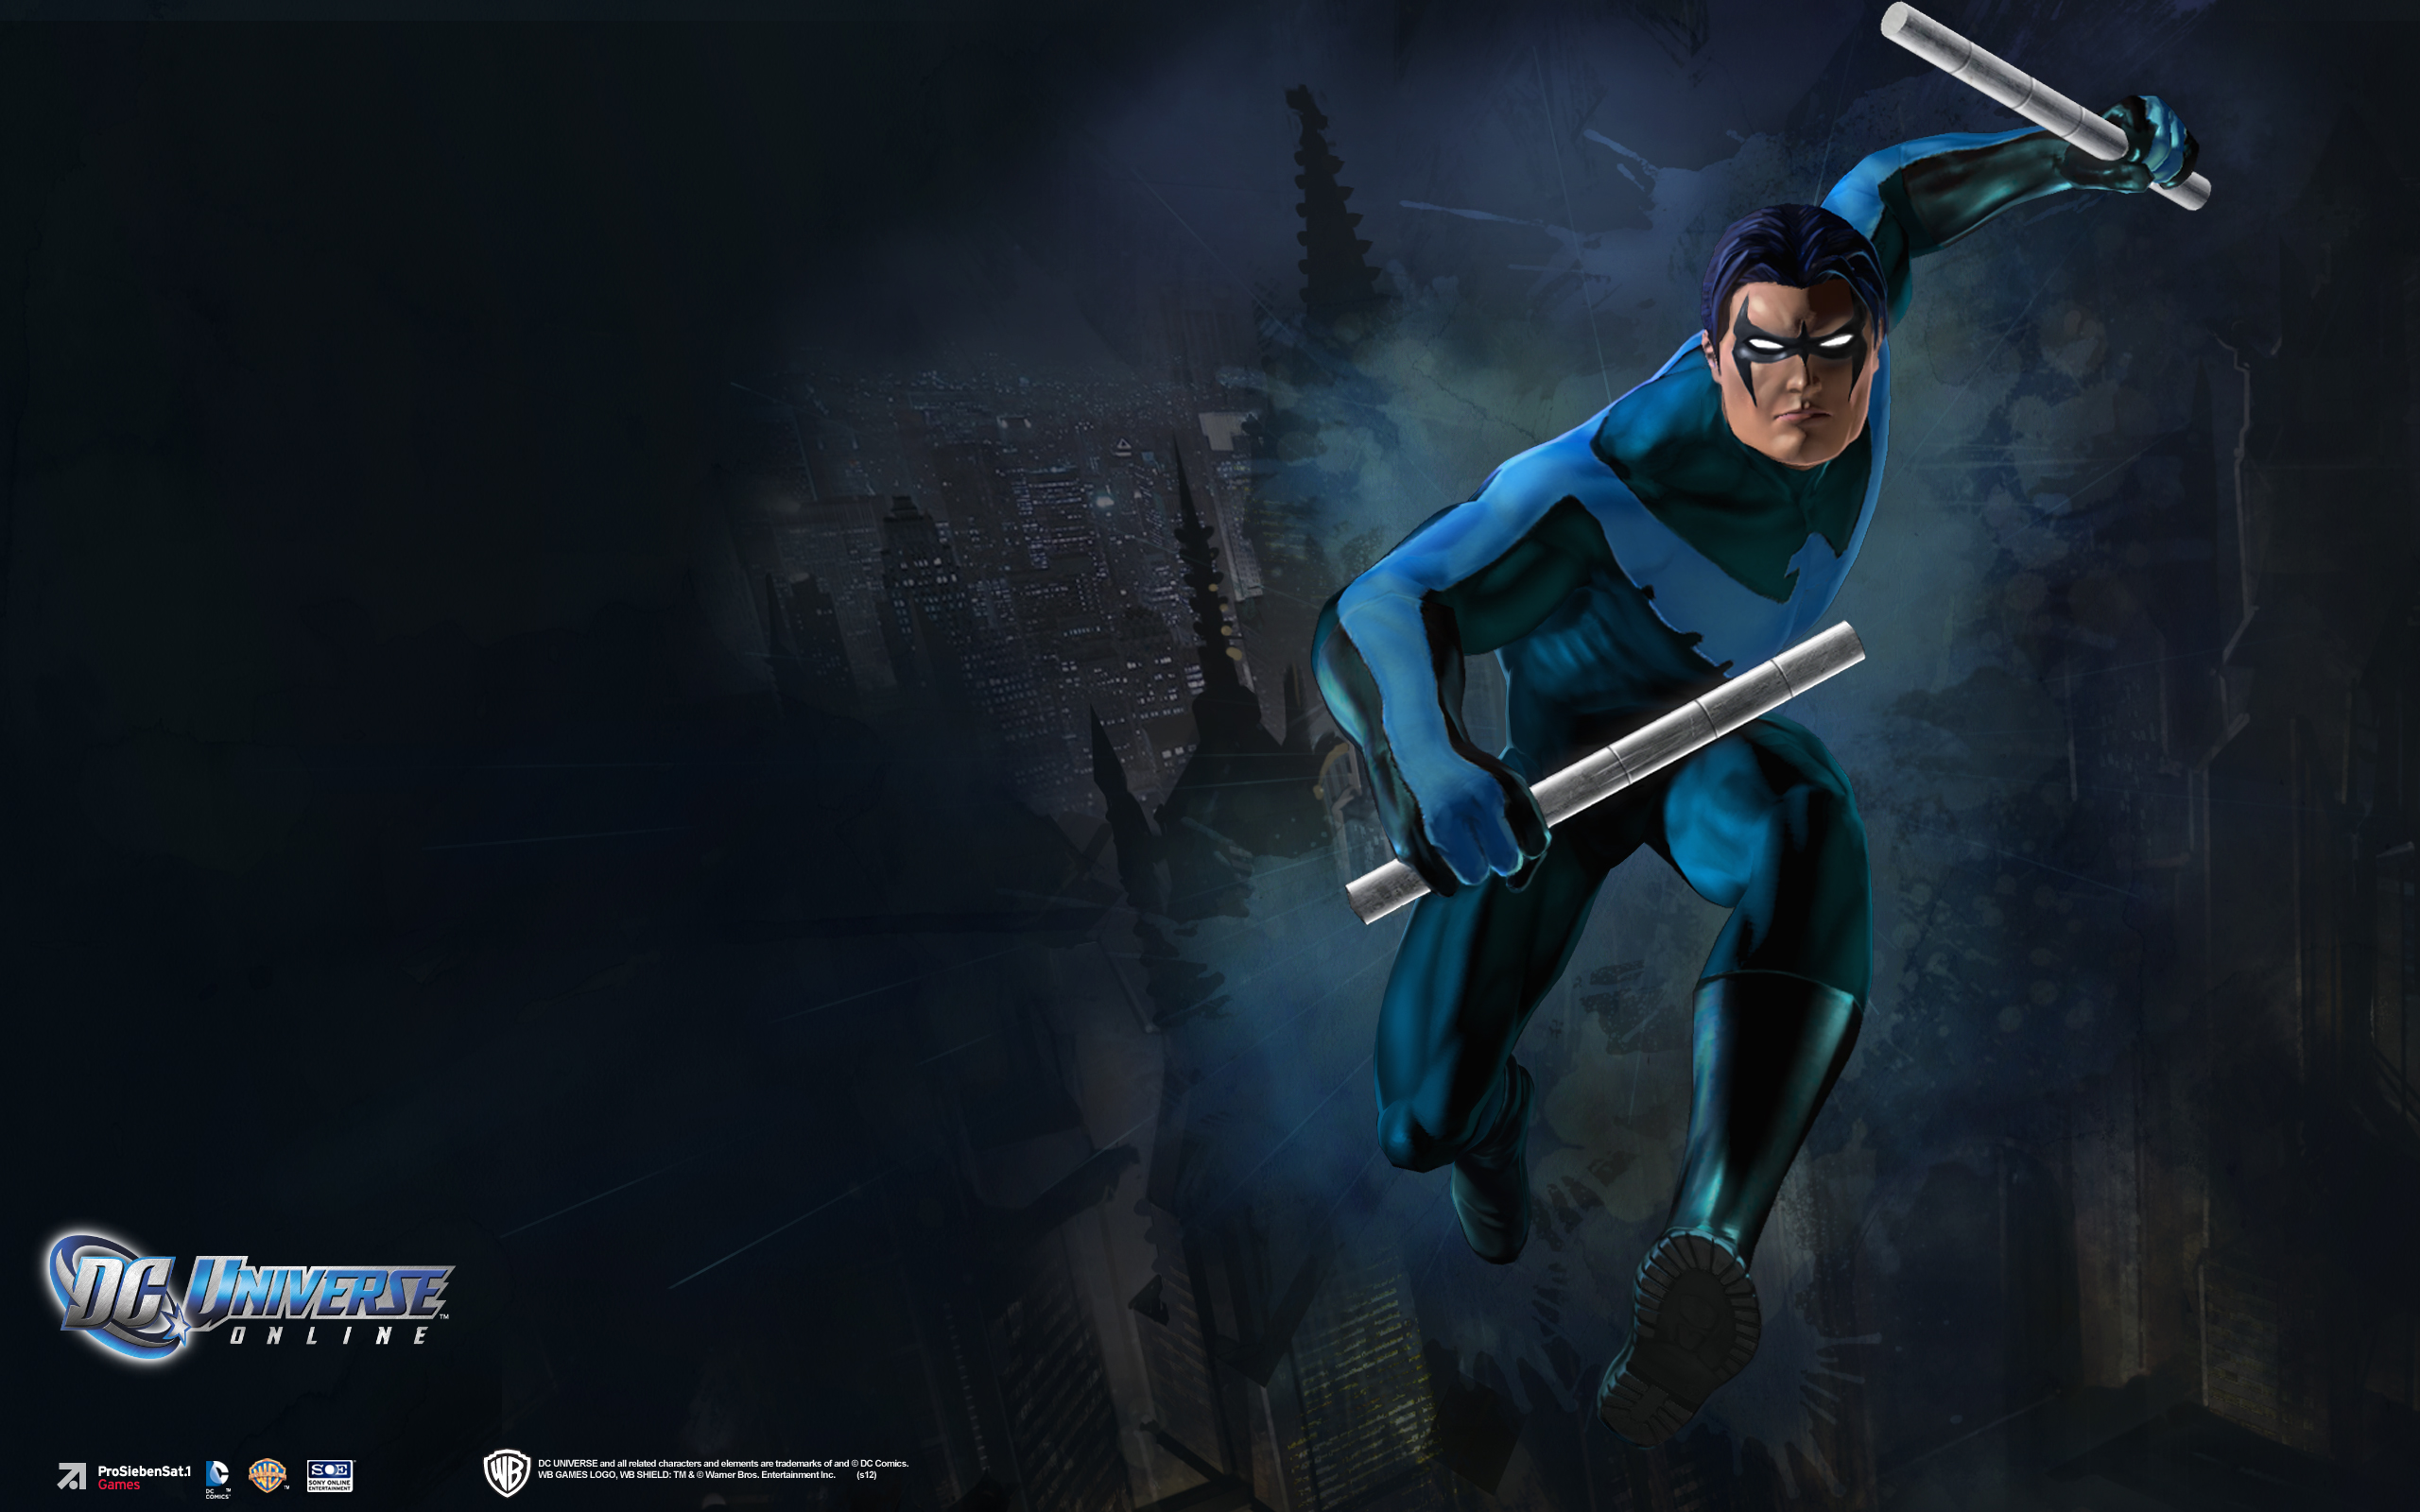  UNIVERSE ONLINE d c superhero comics nightwing f wallpaper background 2560x1600